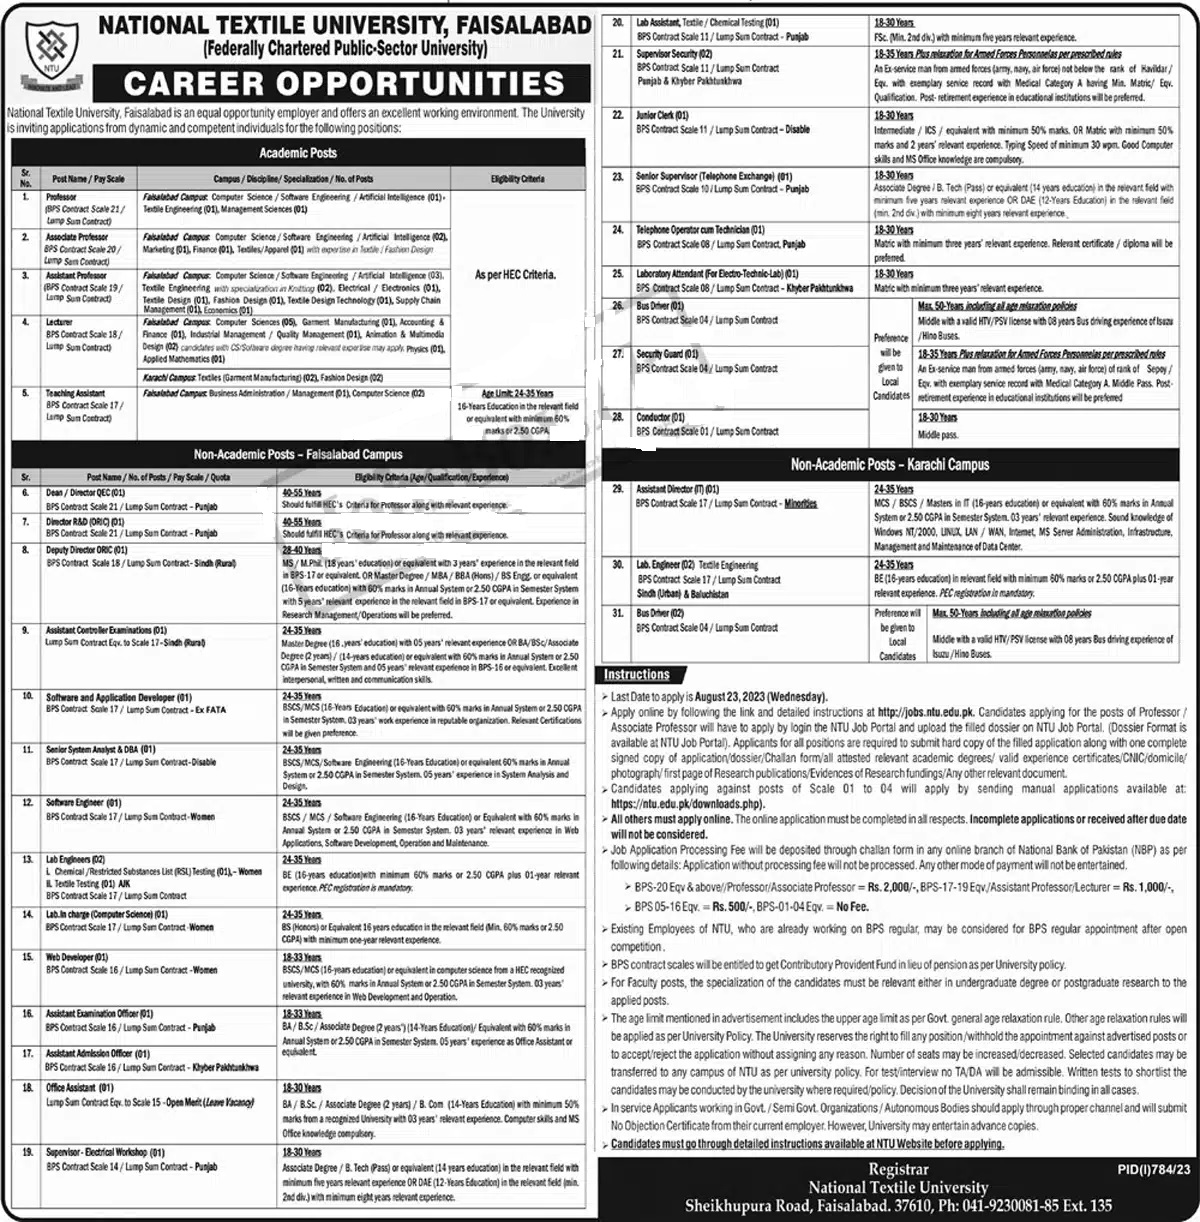 National Textile University Jobs 2023 For Faislabad And Karachi